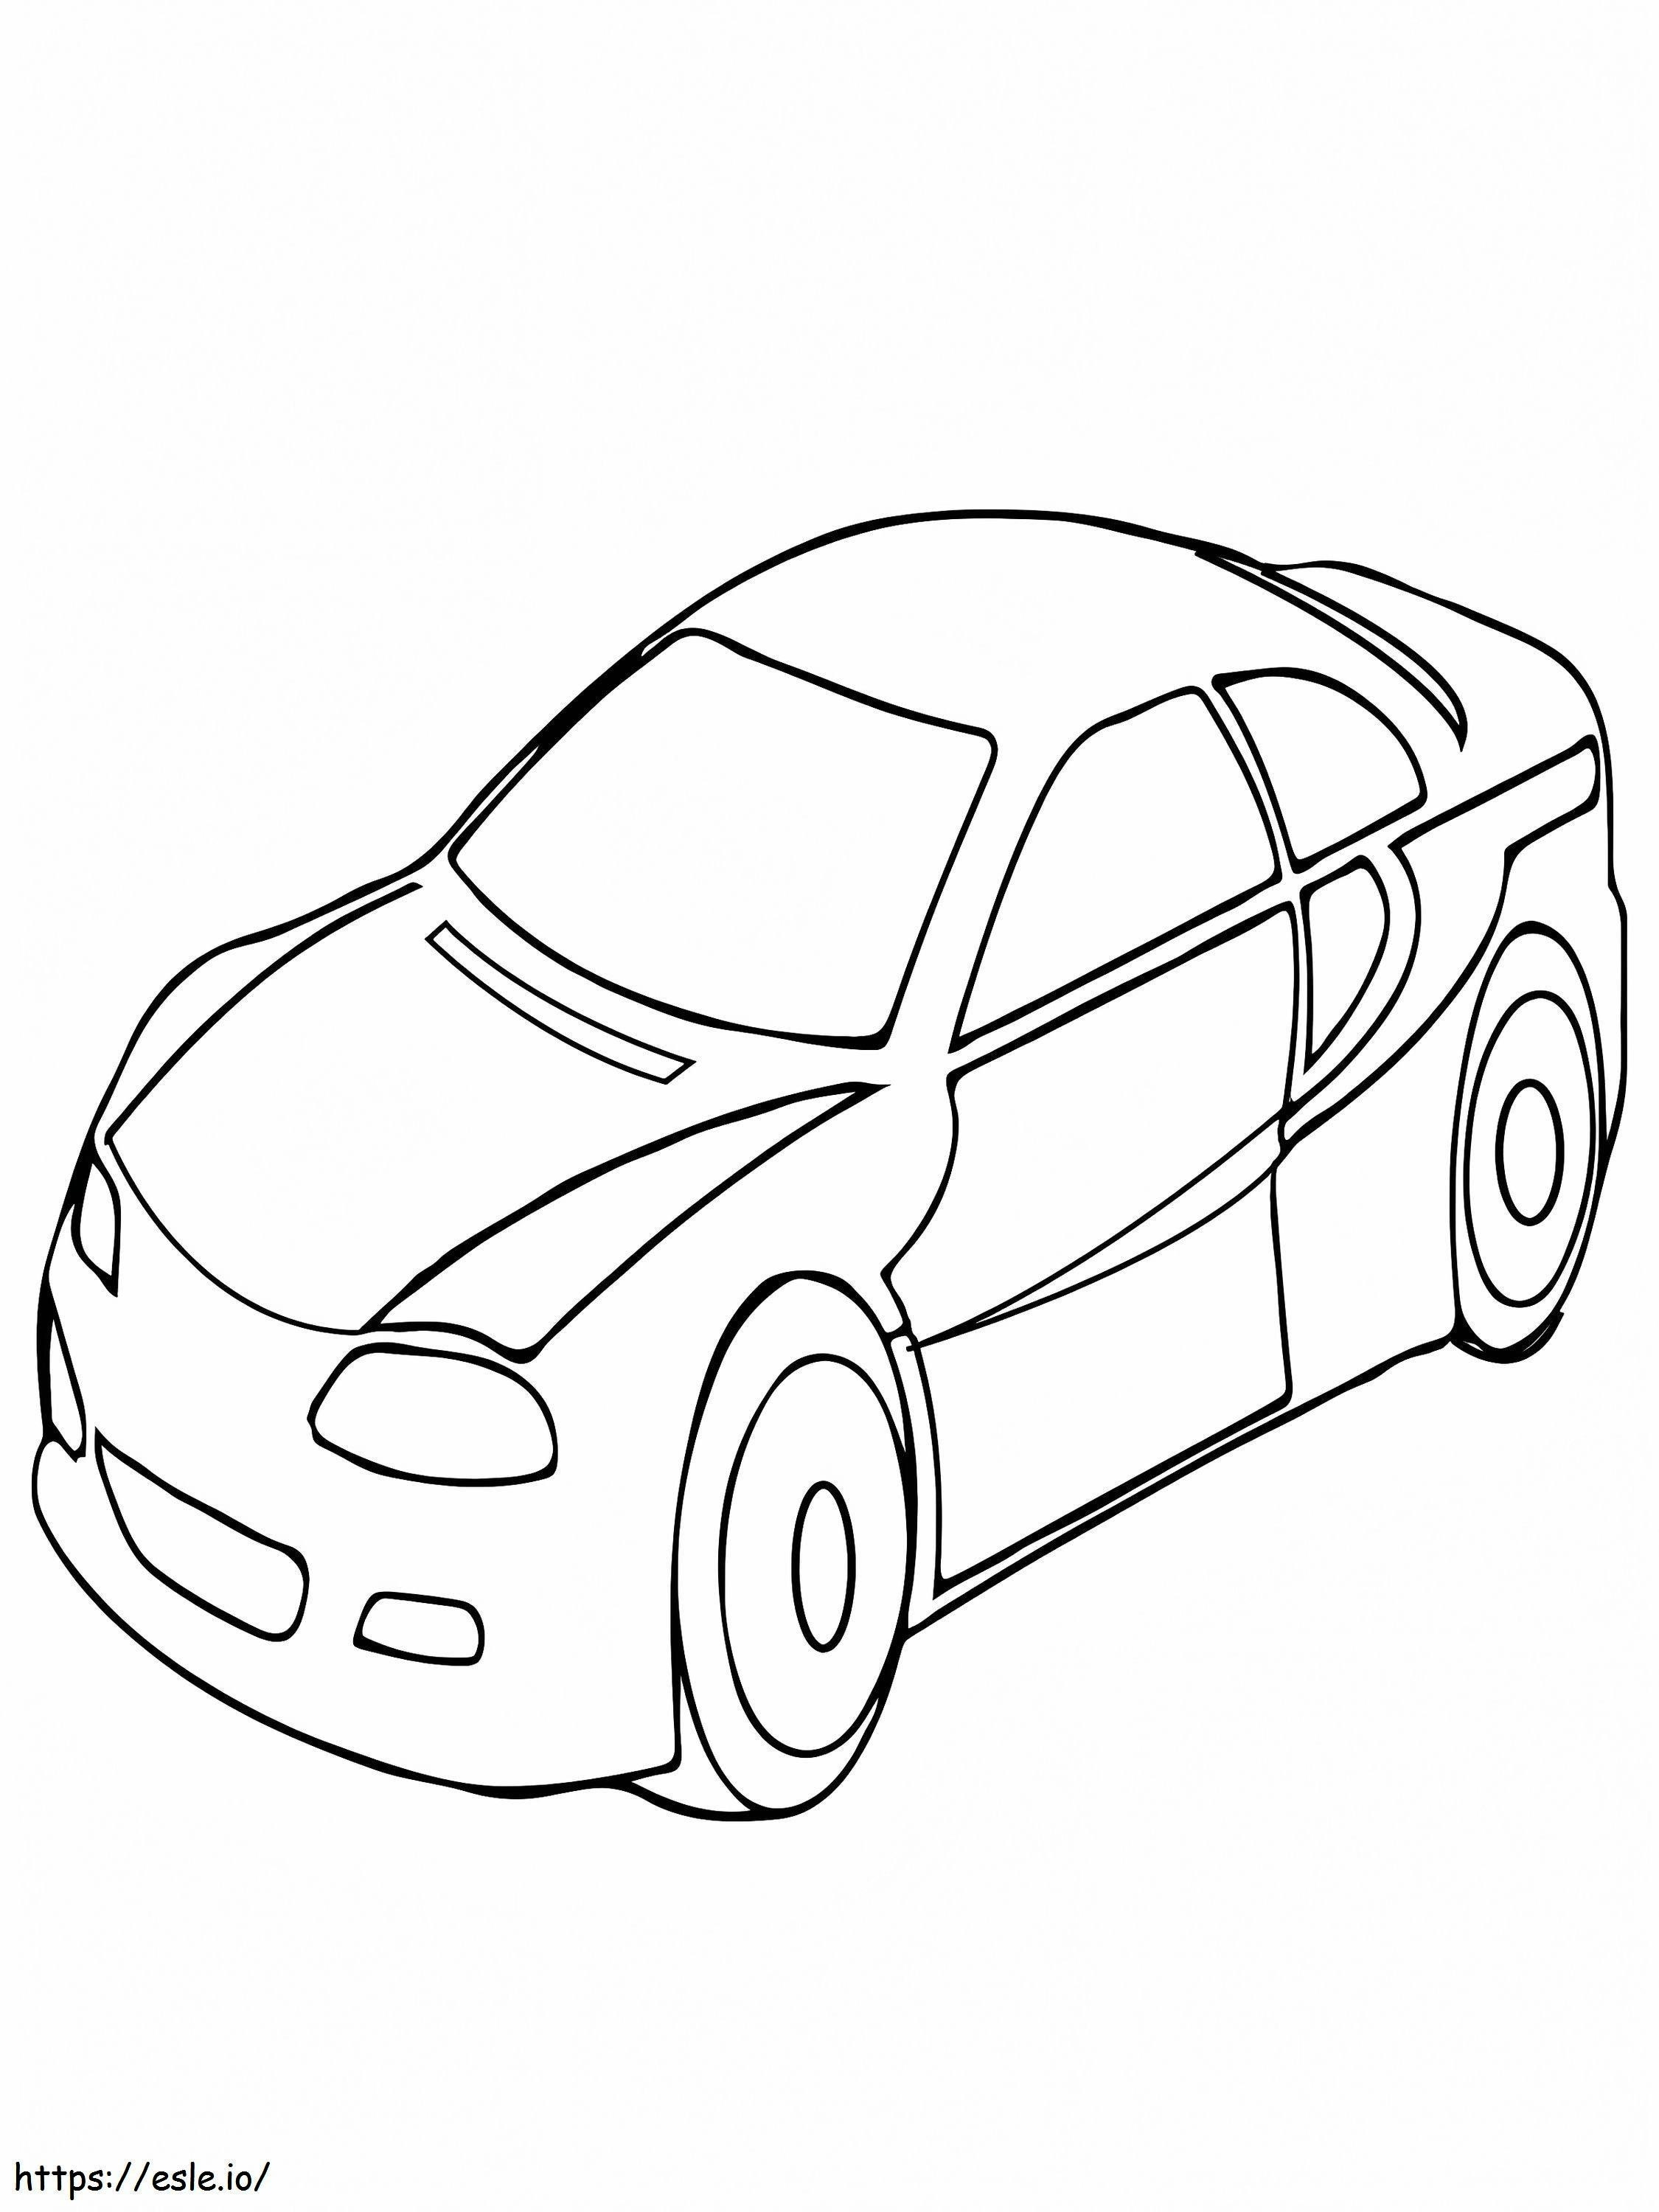 Design de carro cupê para colorir